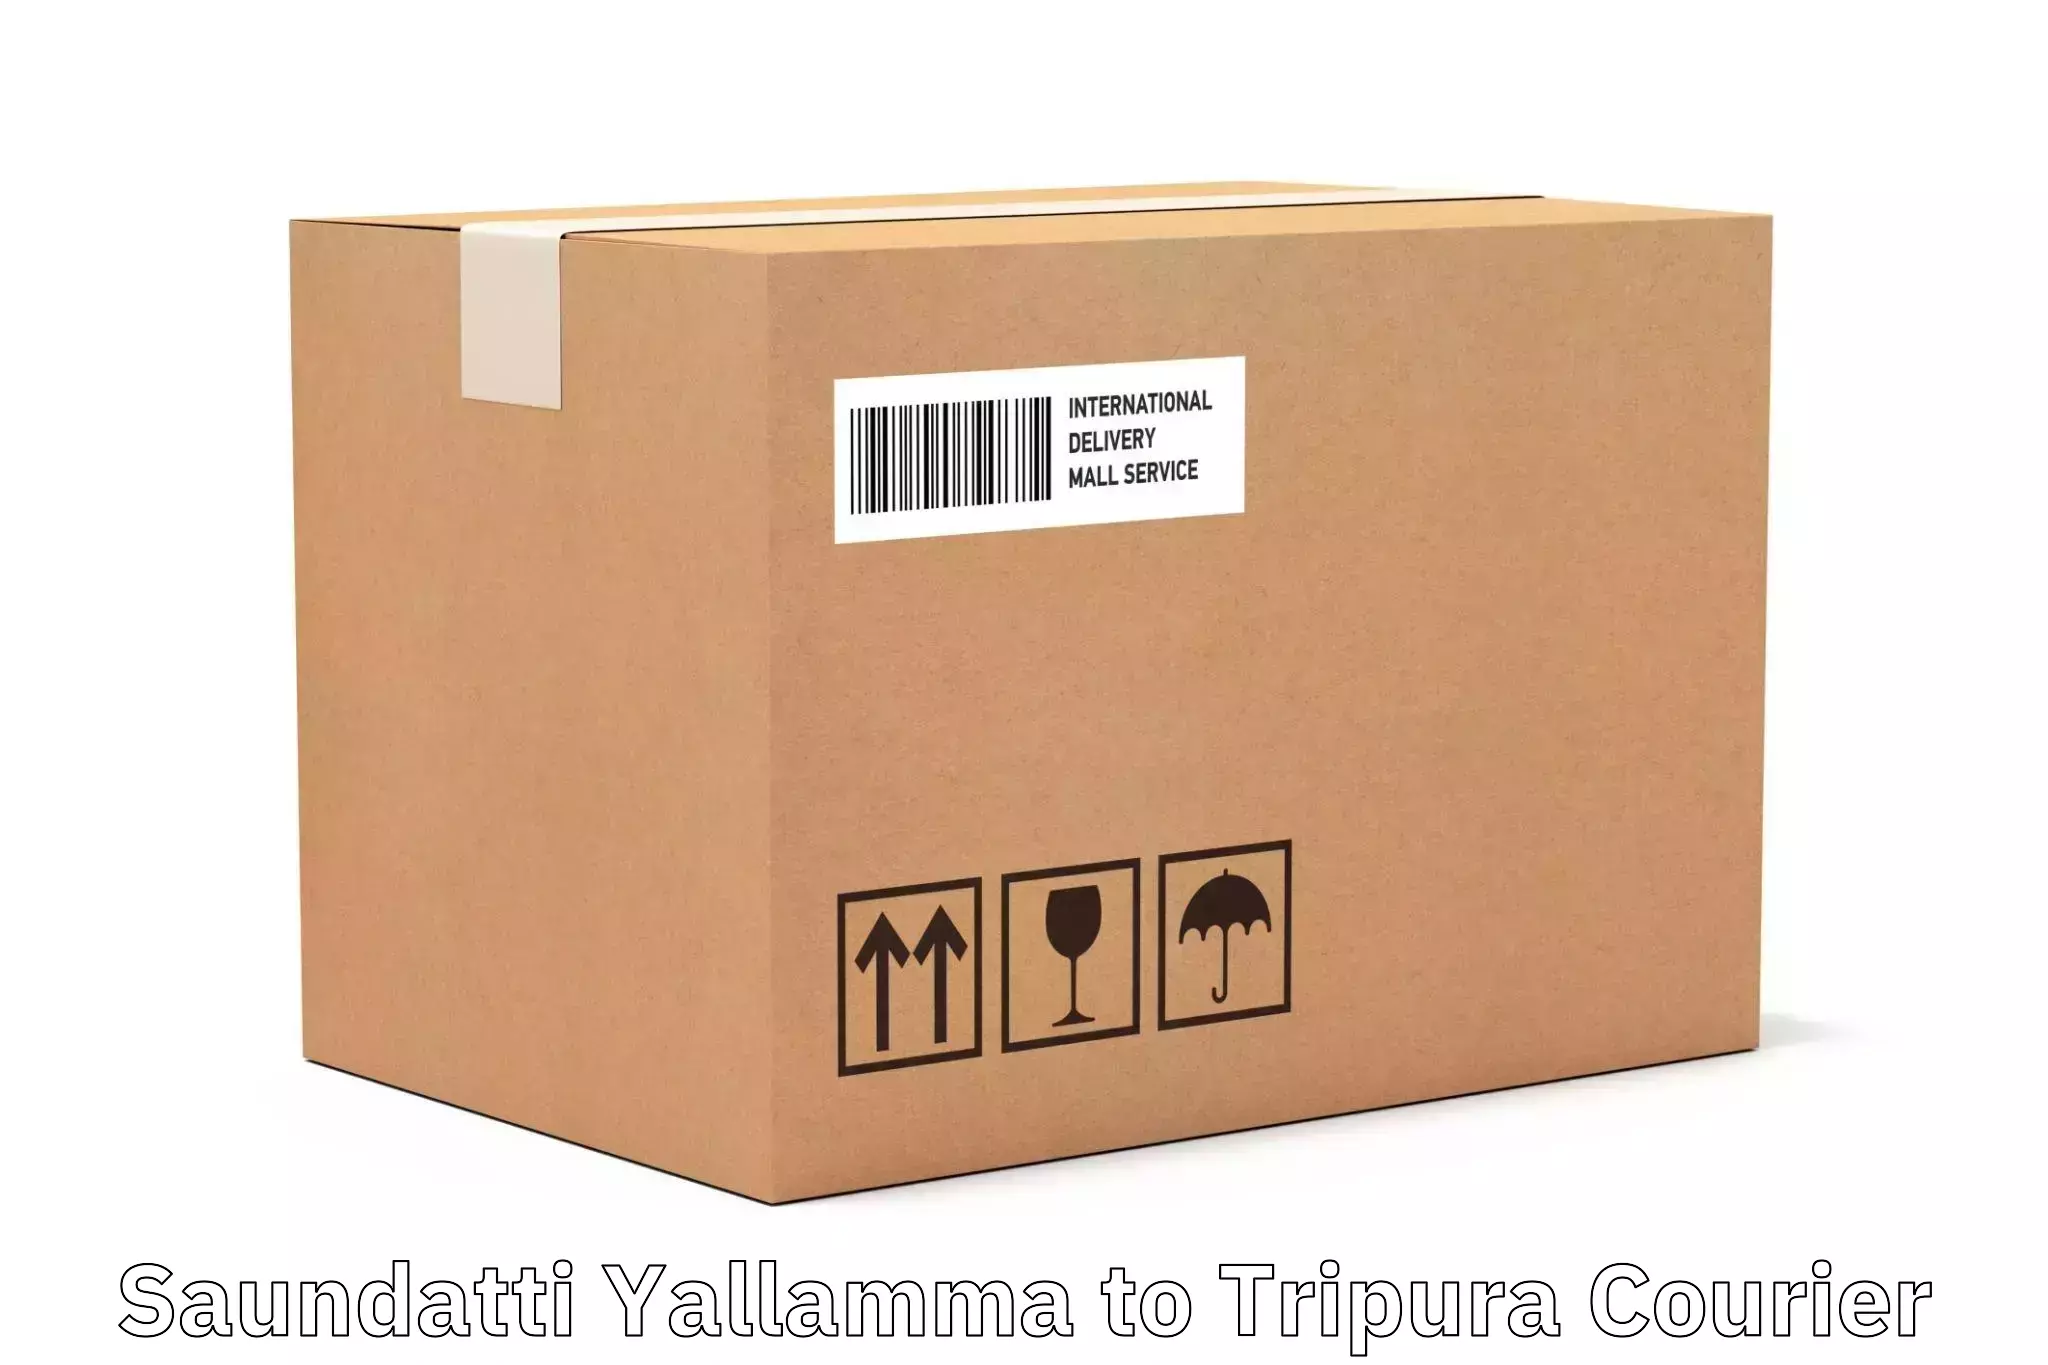 Courier service innovation Saundatti Yallamma to Tripura